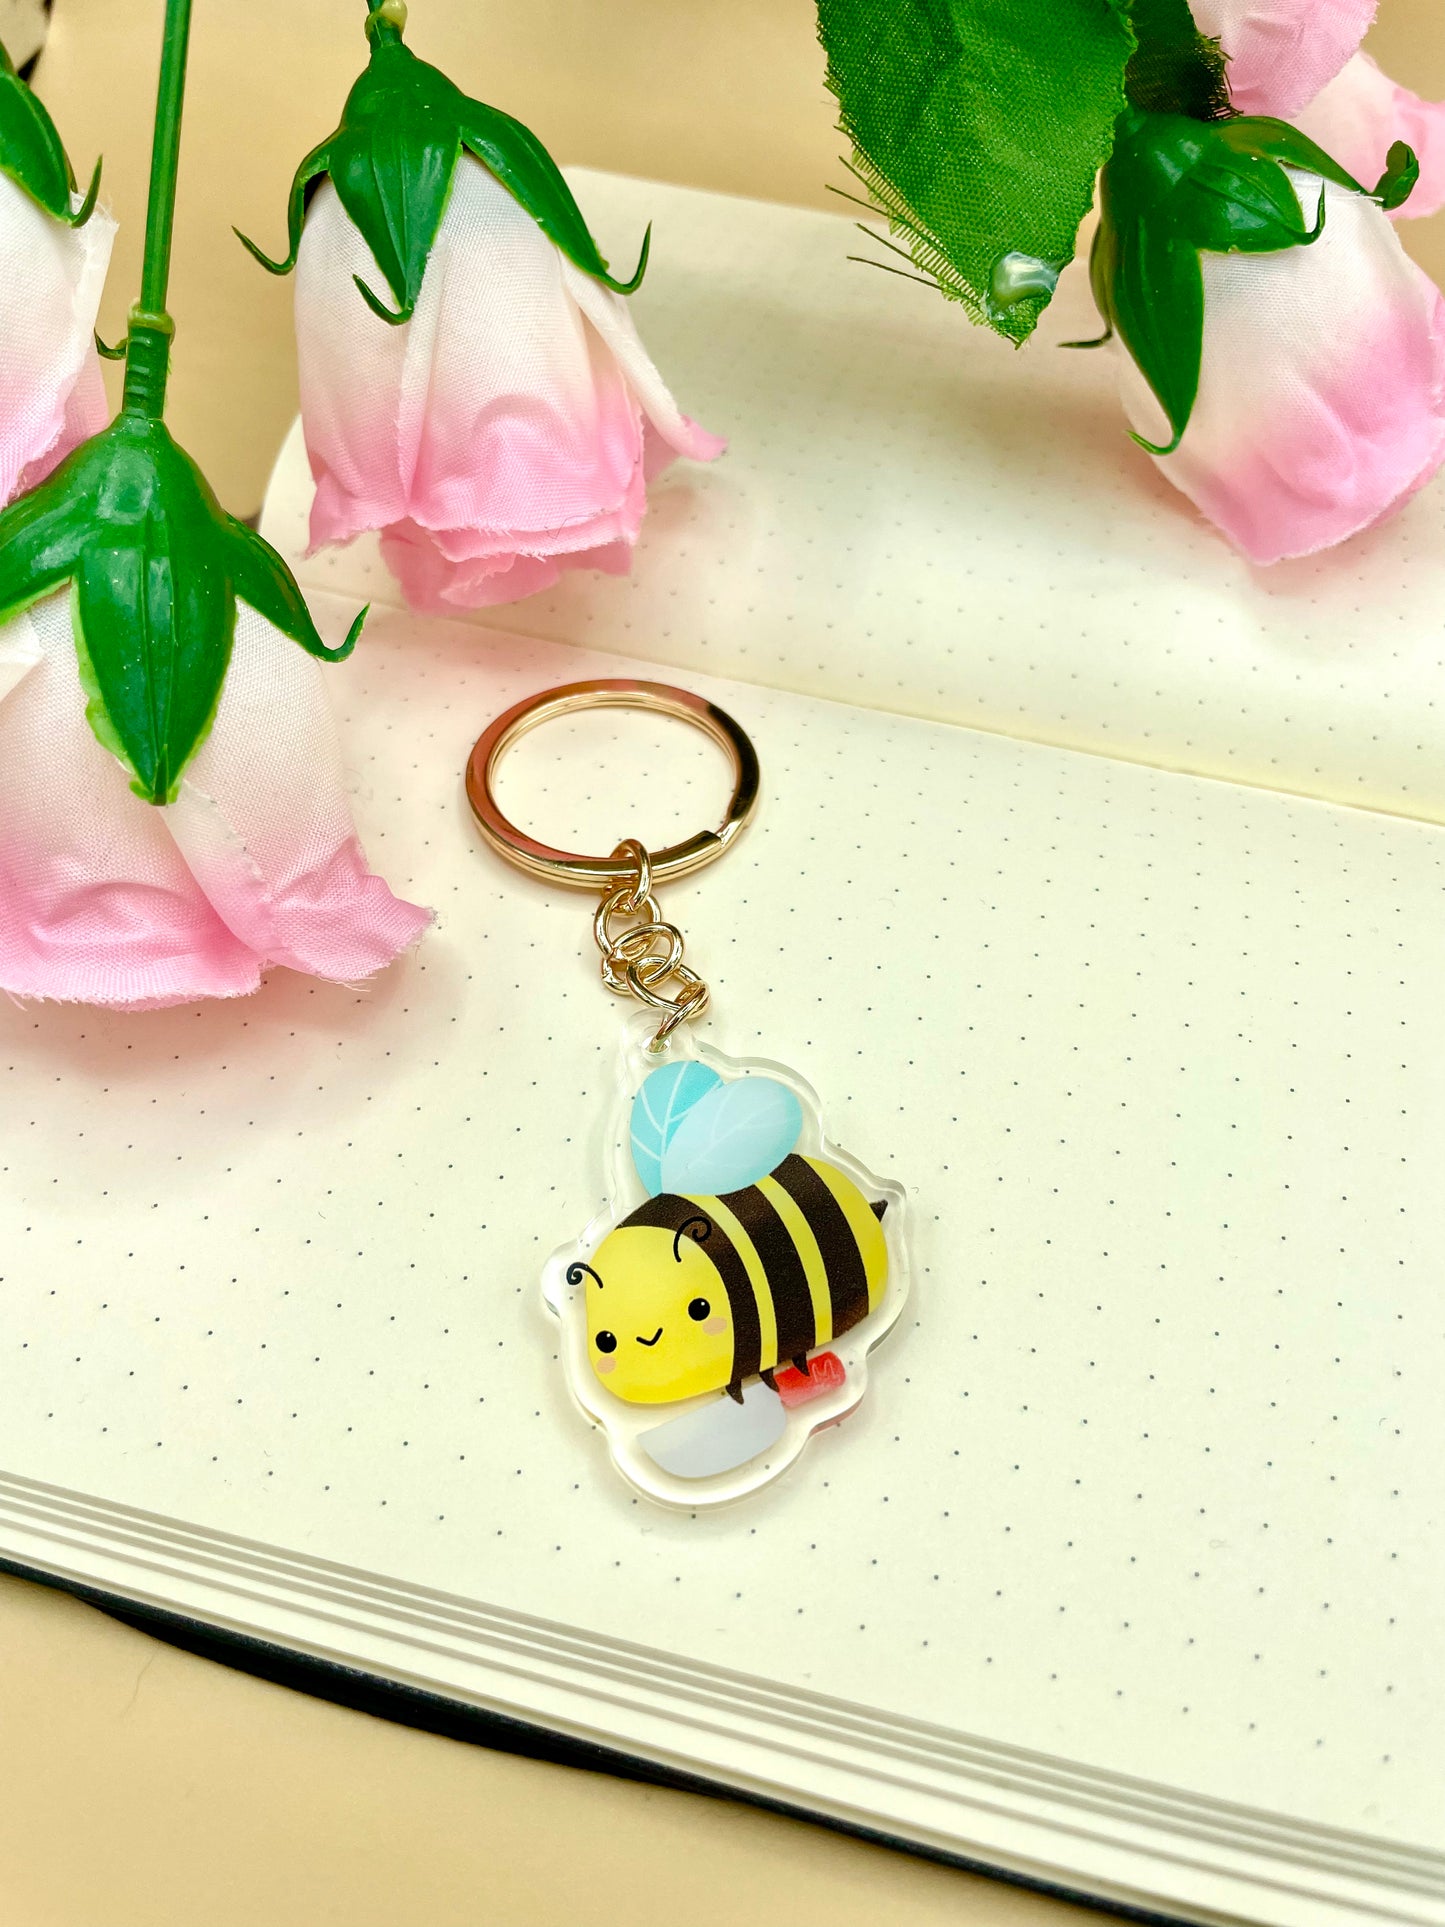 Killer Bee Keychain & Vinyl Sticker (Stabby Bee)